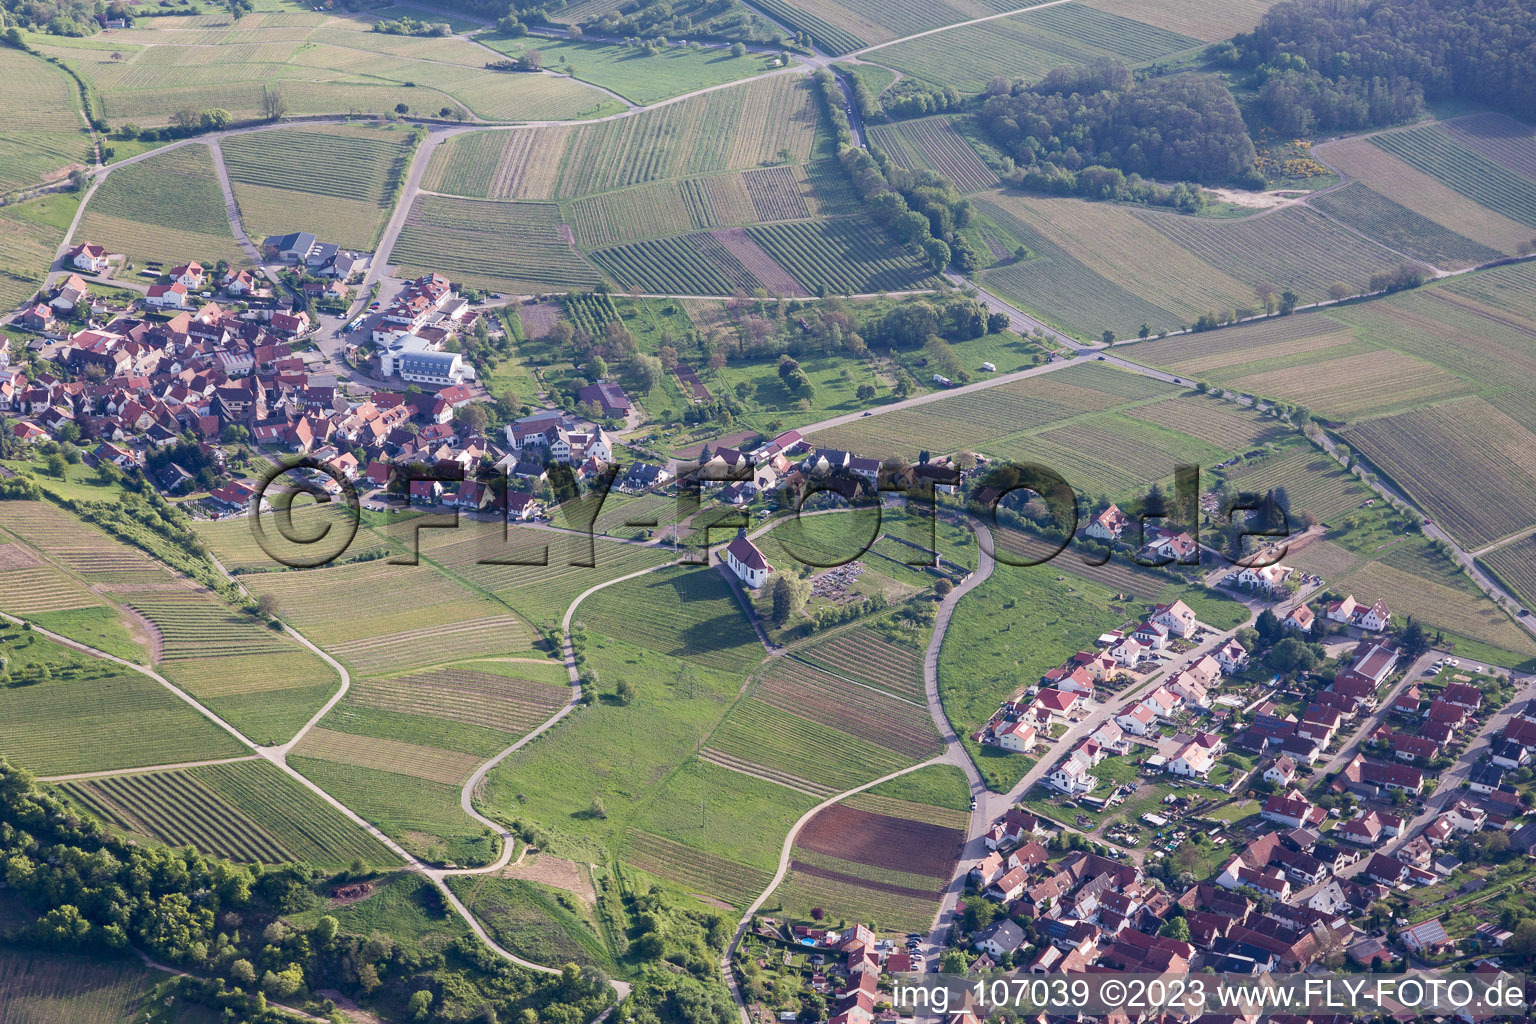 Aerial view of District Gleiszellen in Gleiszellen-Gleishorbach in the state Rhineland-Palatinate, Germany